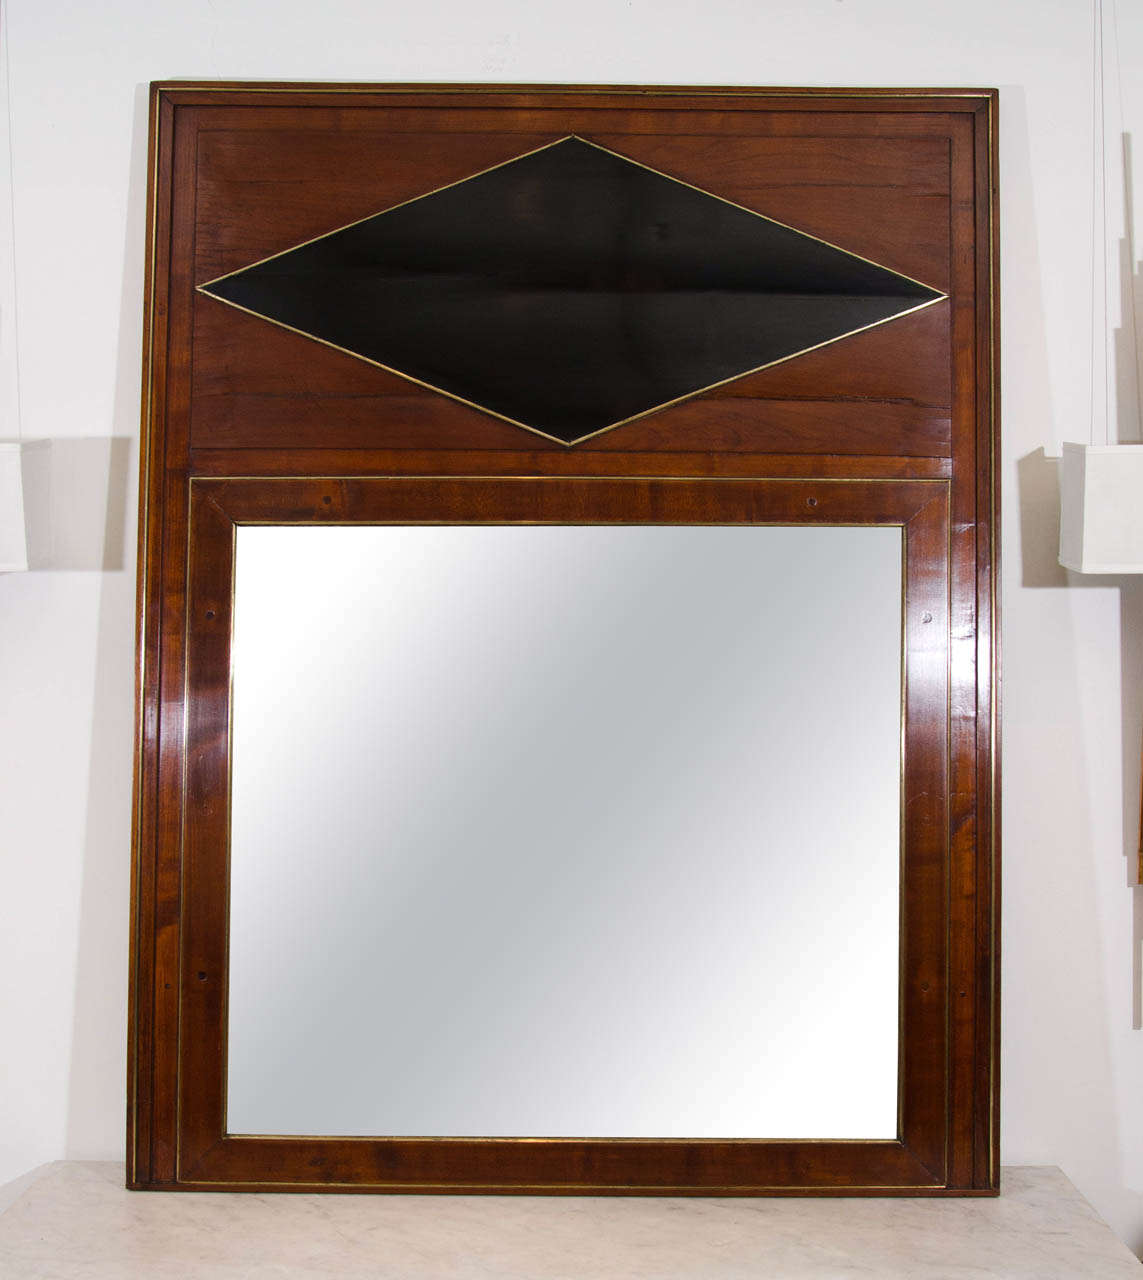 Empire mahogany trumeau mirror with brass trim and ebonized diamond center detail.